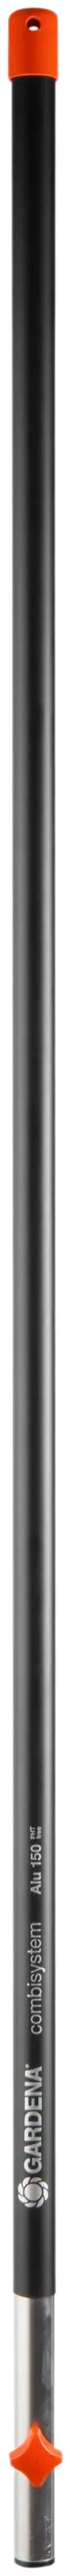 Gardena Combisystem-alumiinivarsi 130 cm, suora - 1